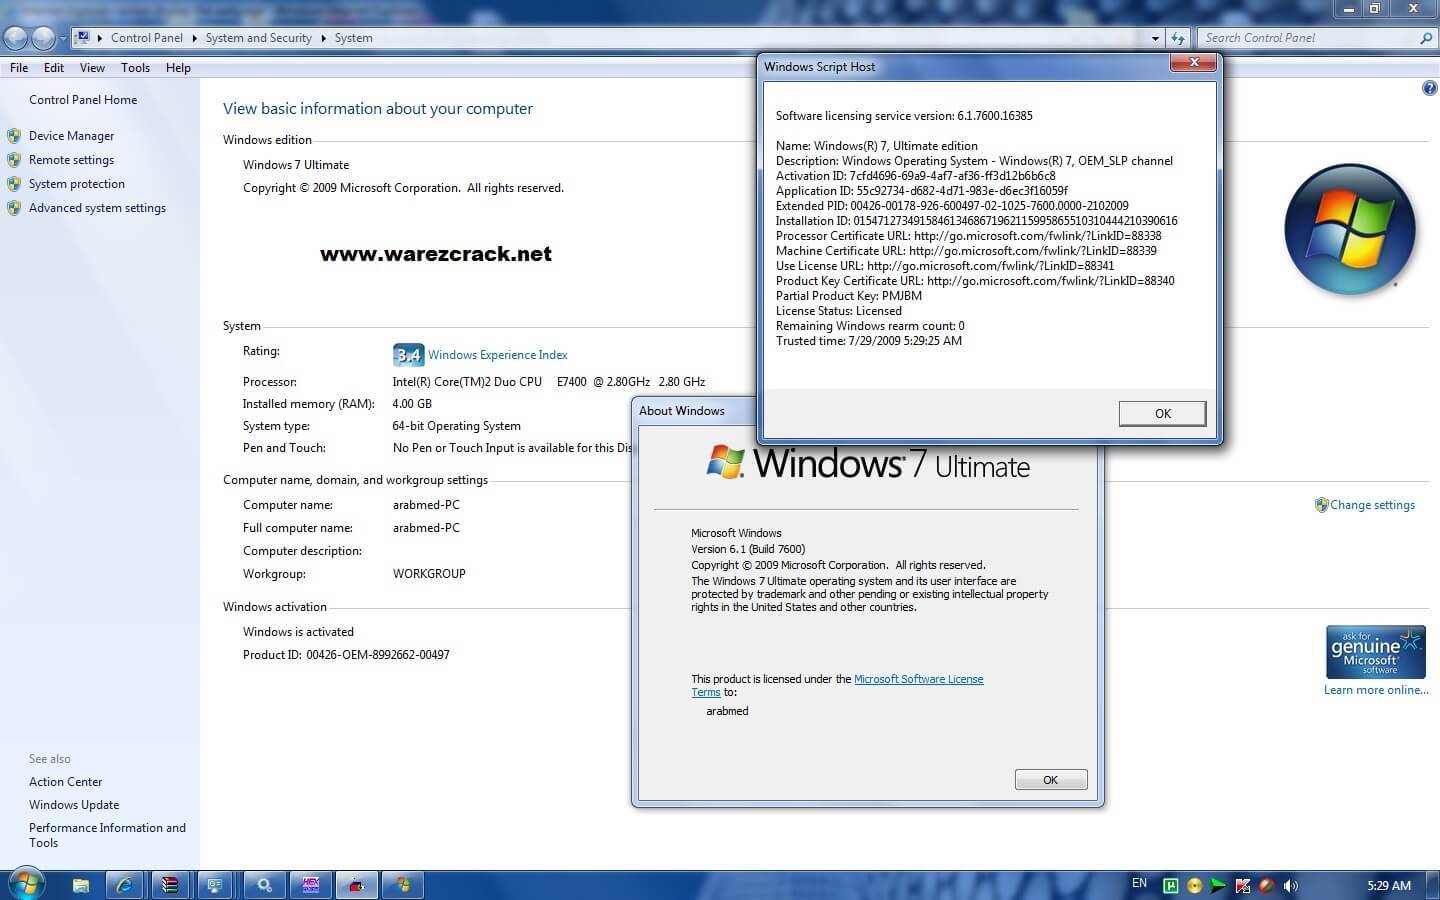 Windows Vista Ultimate Product Key